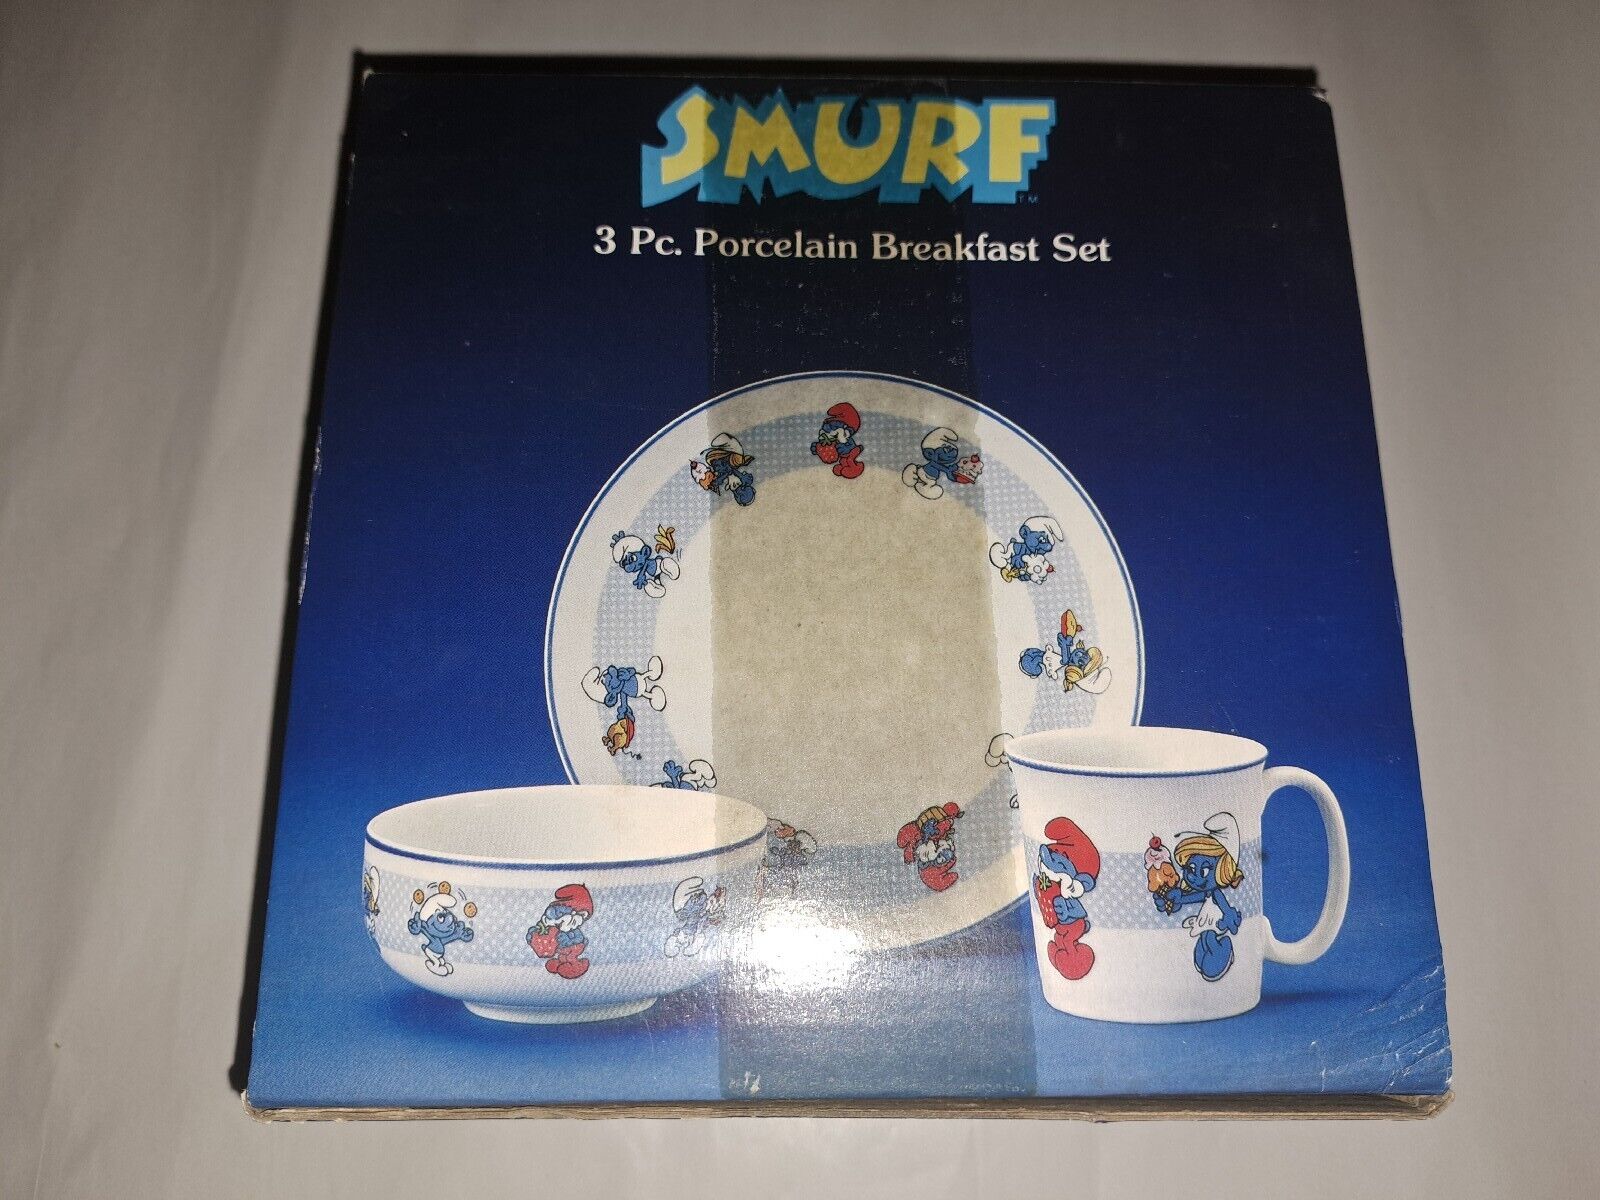 The Smurfs Breakfast Set 1982 Porcelain Plate Bowl Mug 3 Piece WallaceBerrie NEW